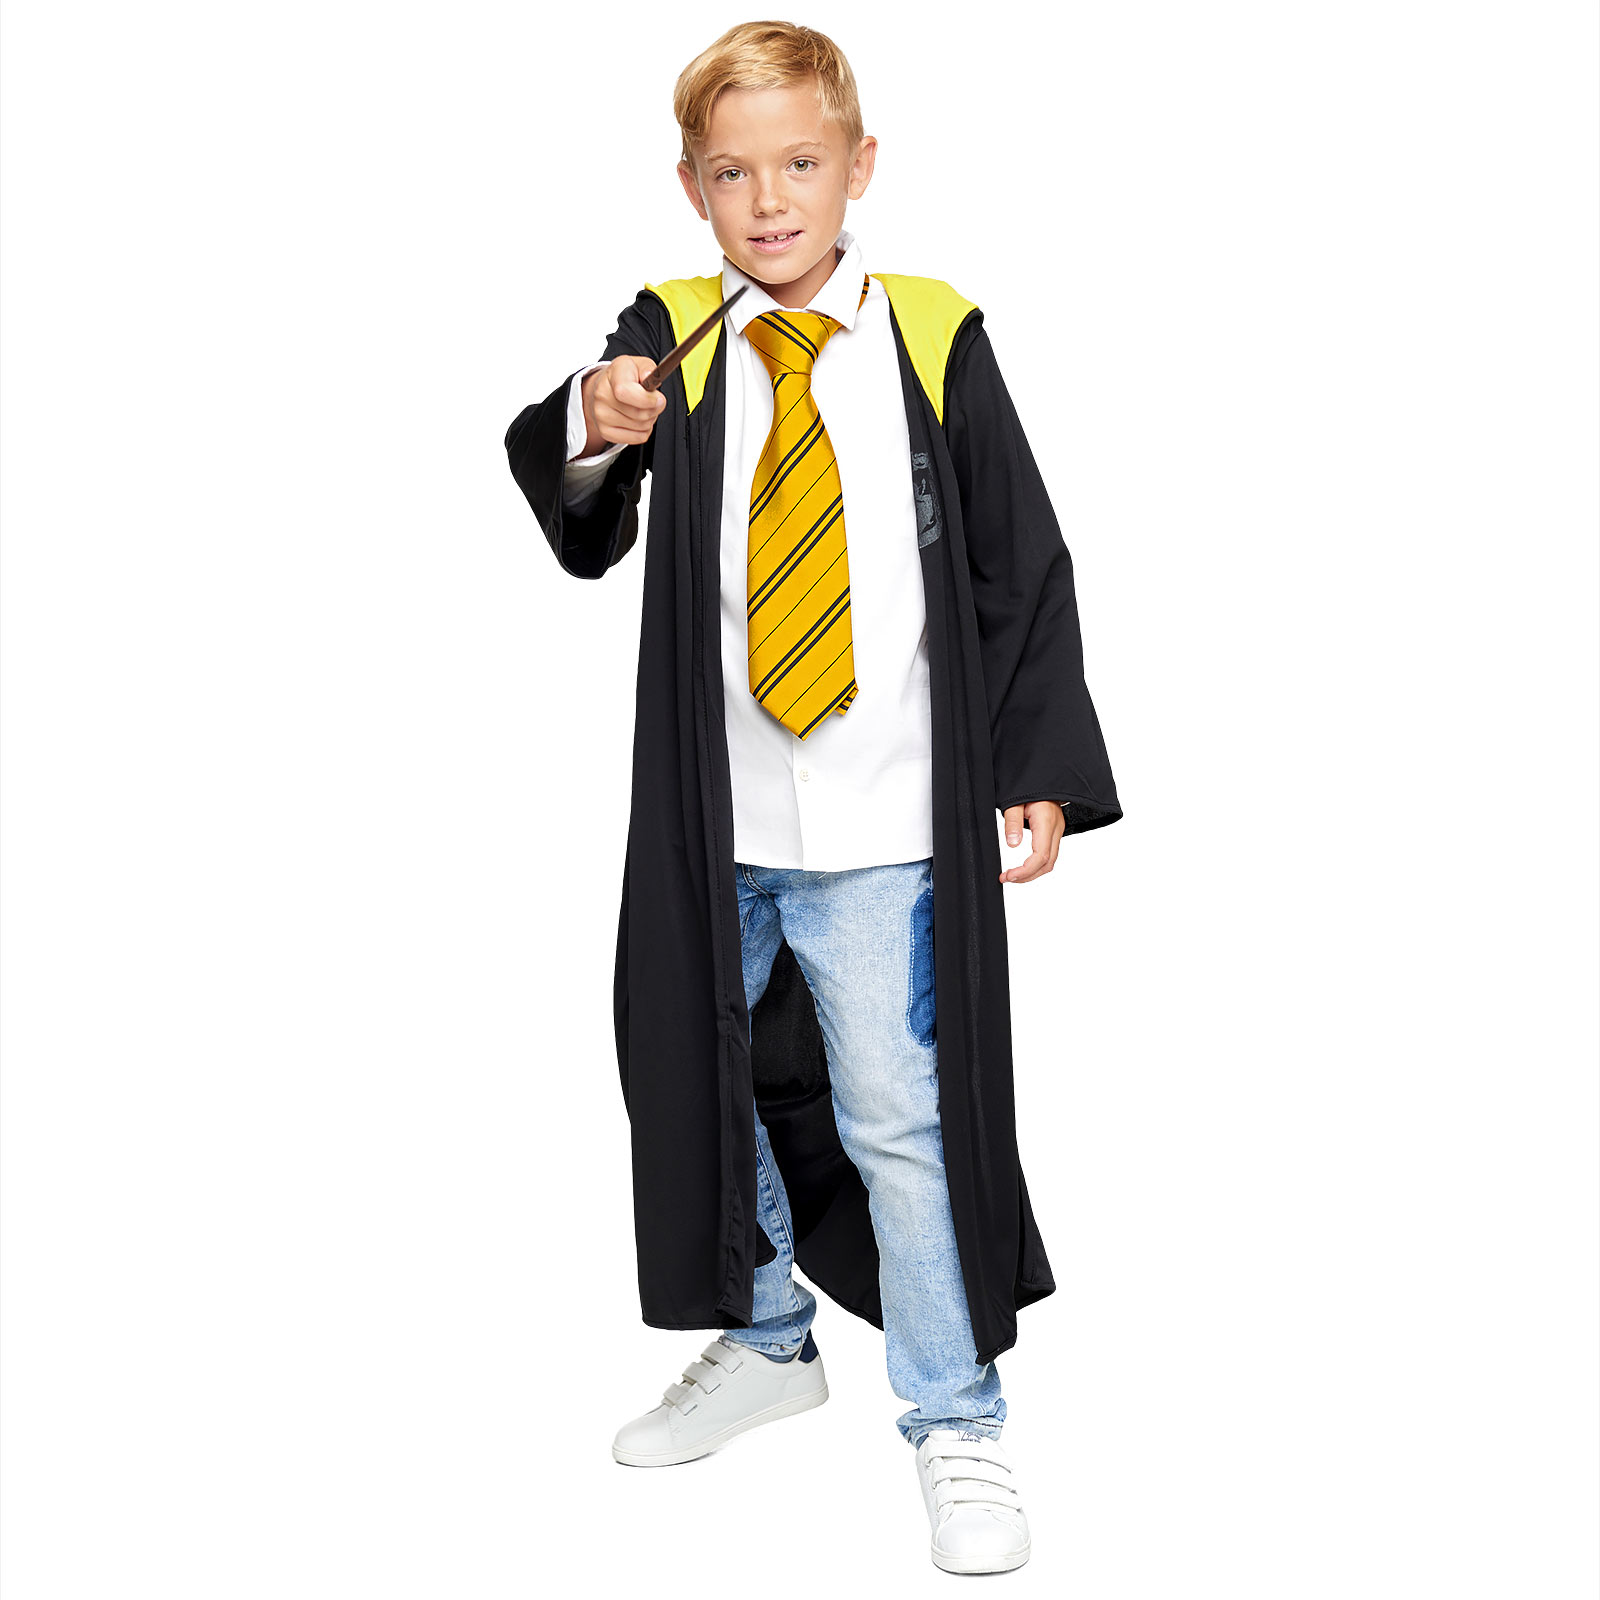 Harry Potter - Hufflepuff Robe für Kinder